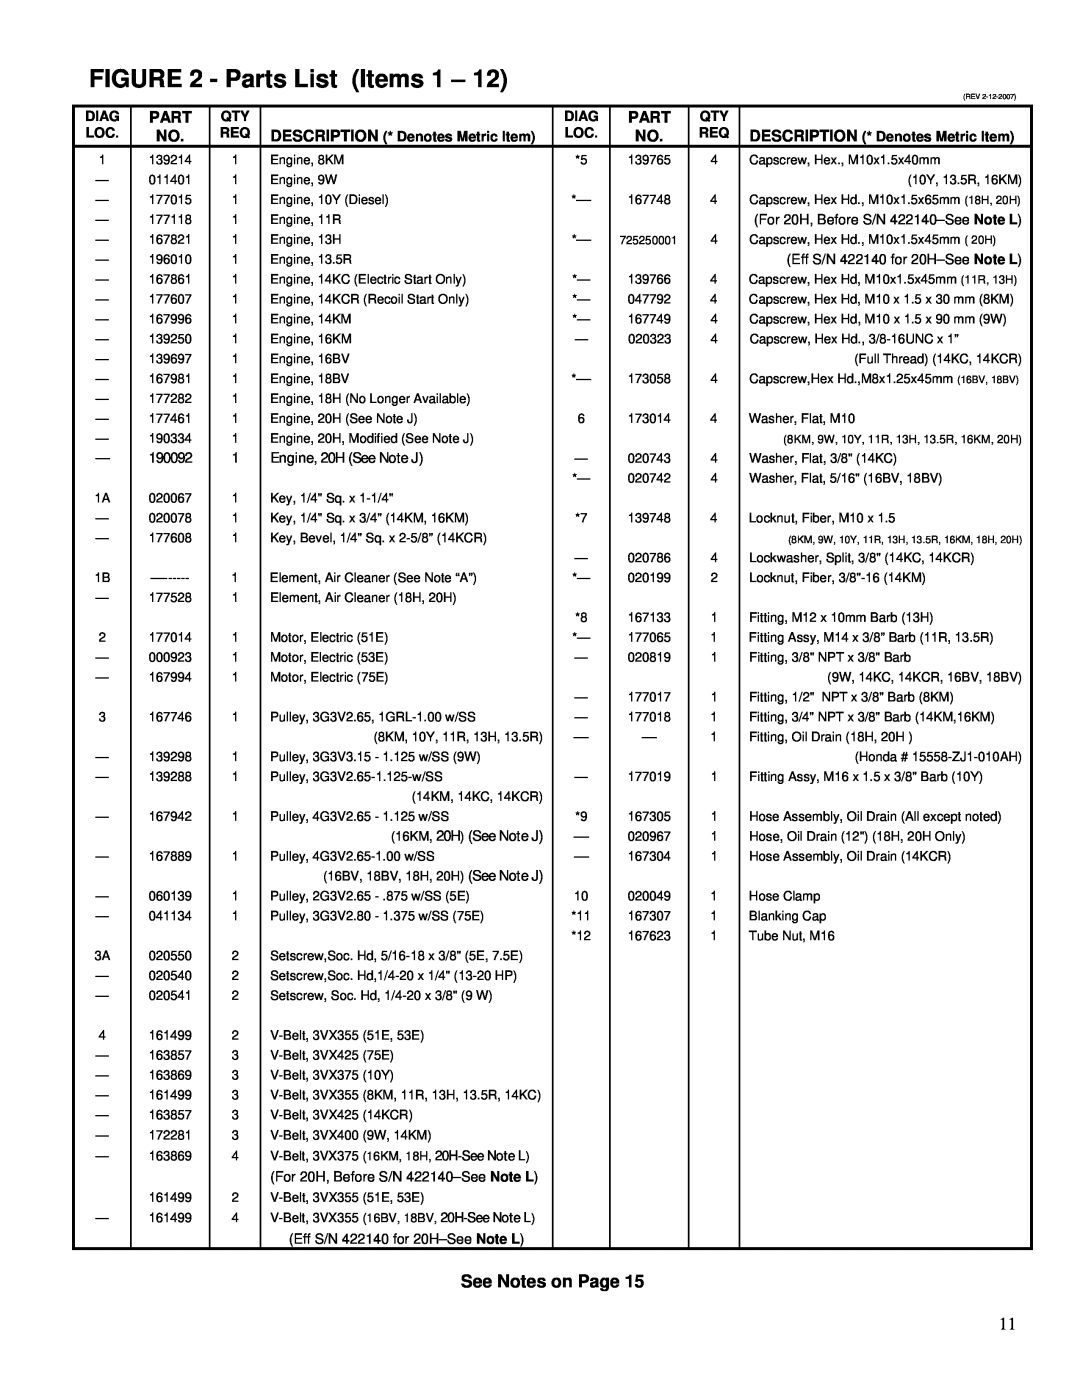 Husqvarna PAC IV-14KCR, PAC IV-8KM, PAC IV-20H, PAC IV-9W Parts List Items 1, Engine, 20H See Note J, 16KM, 20H See Note J 